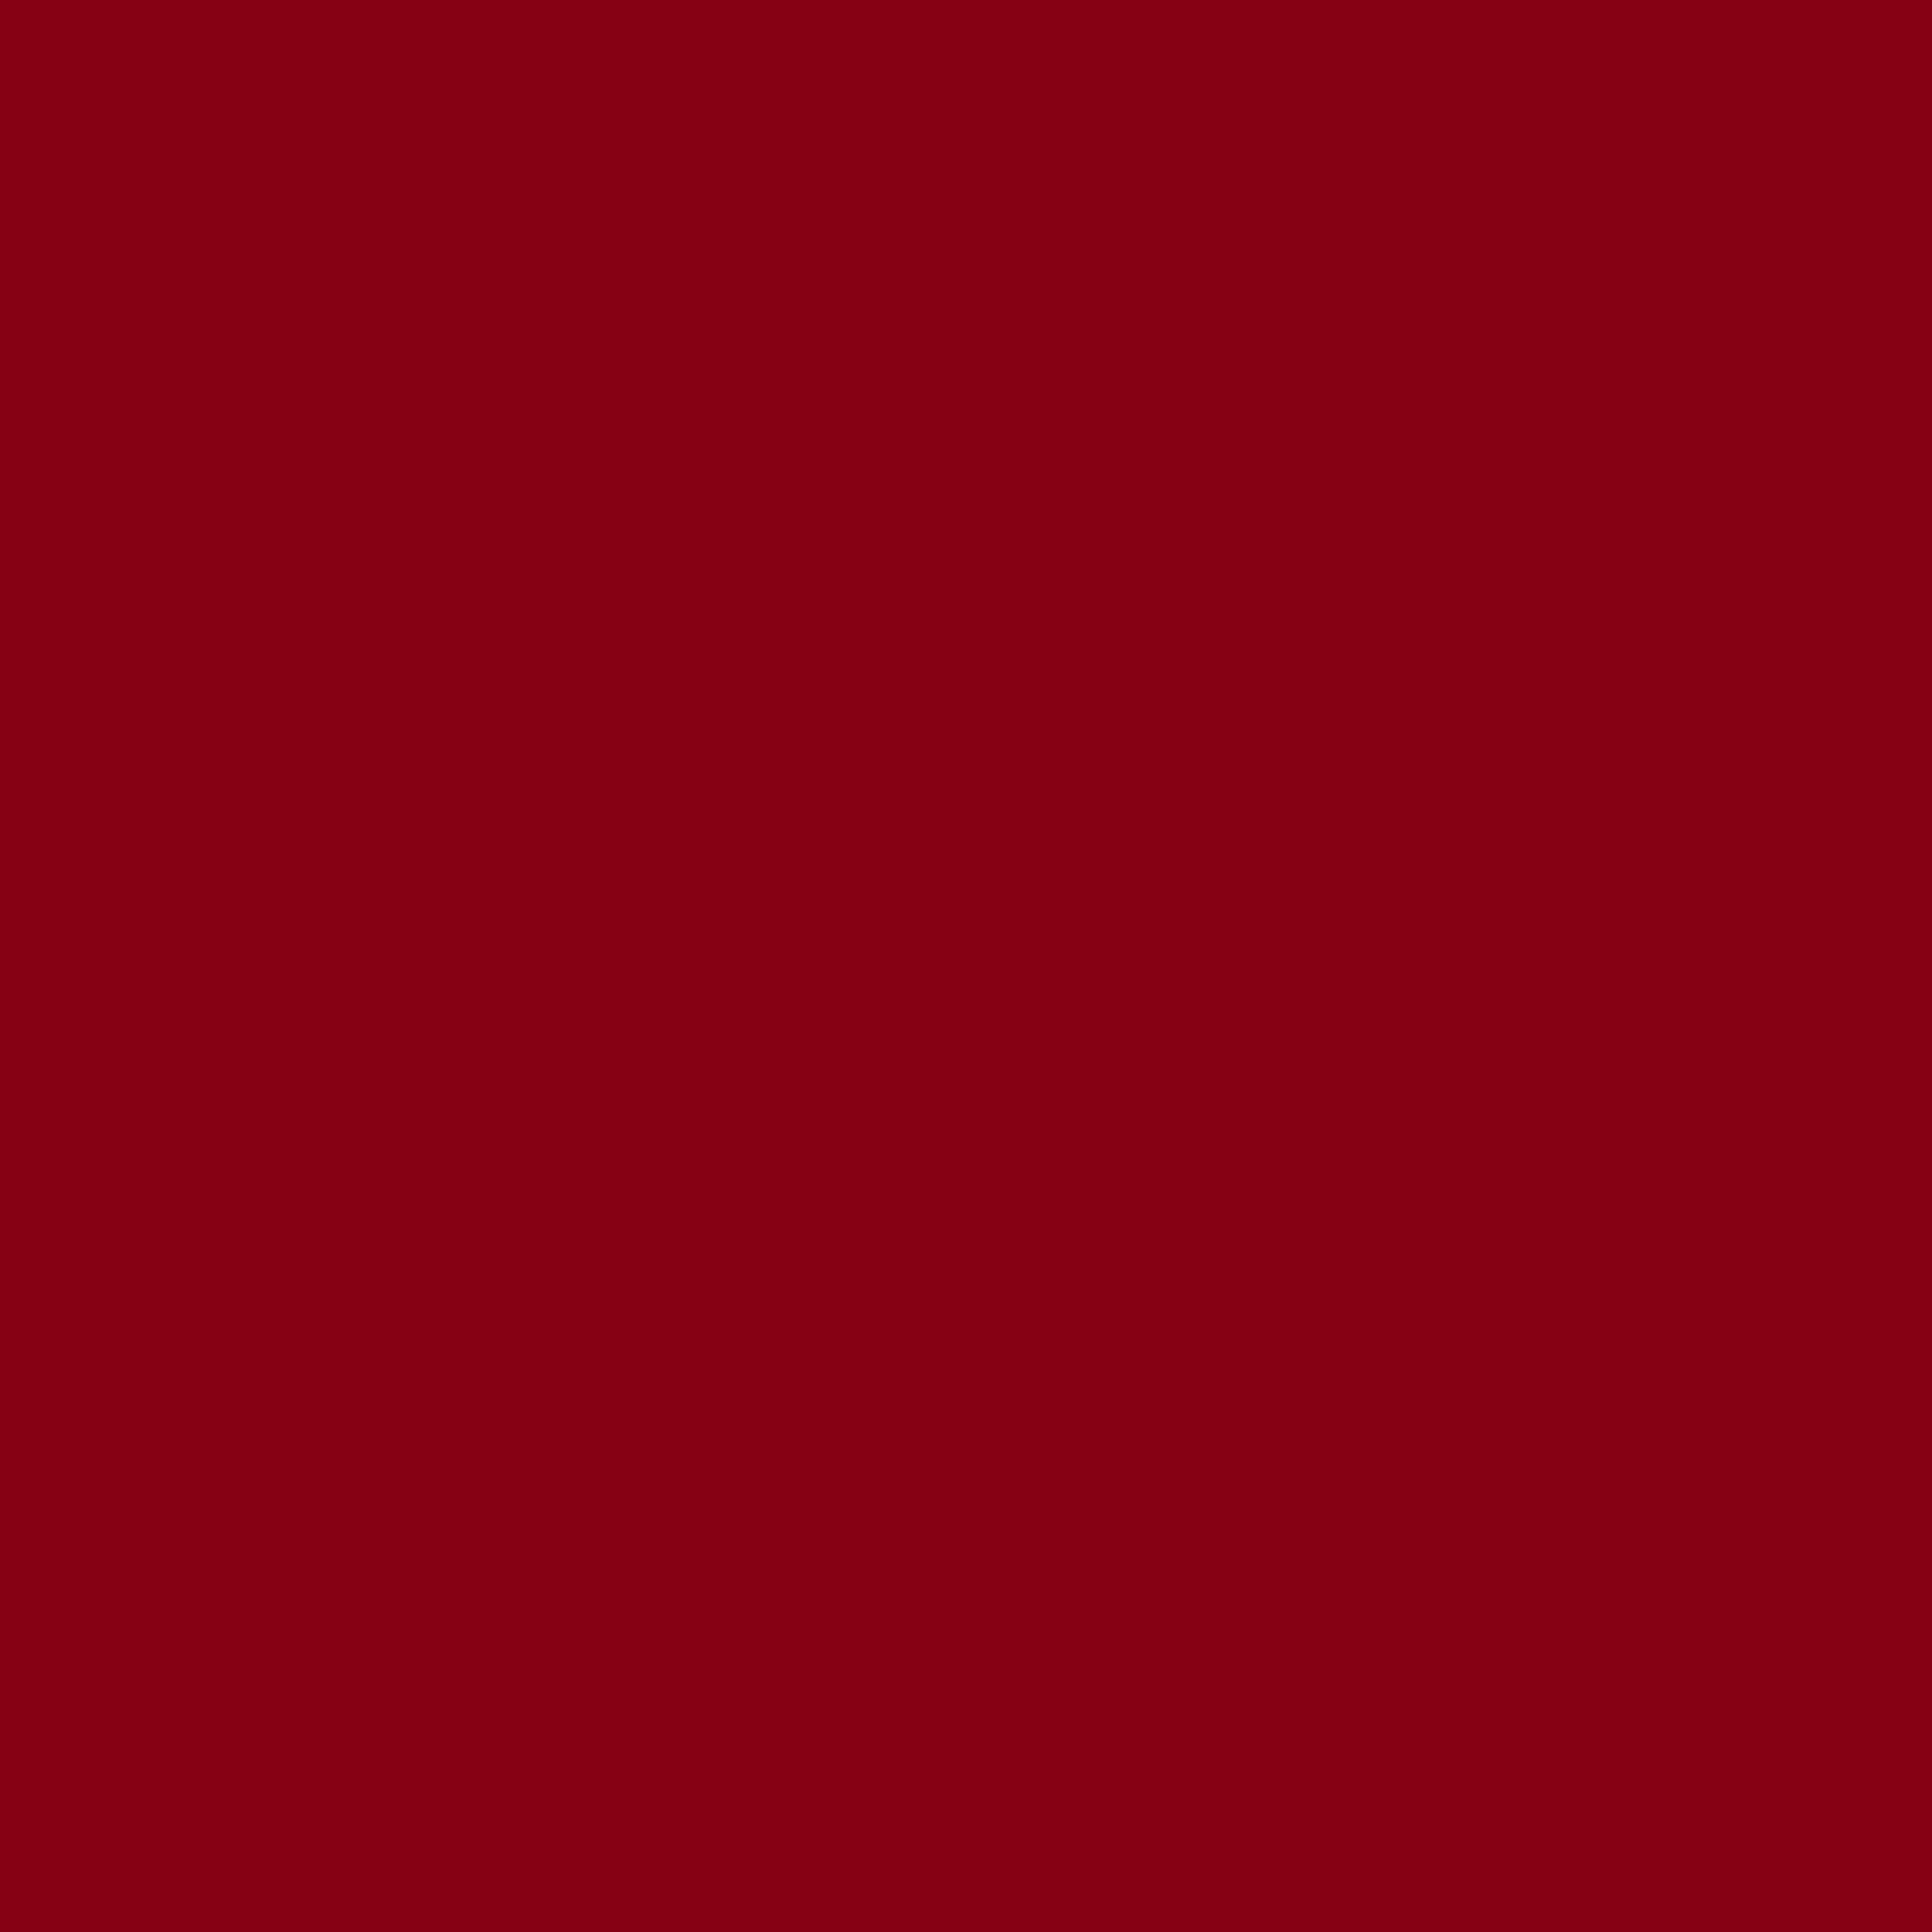 3600x3600 Red Devil Solid Color Background